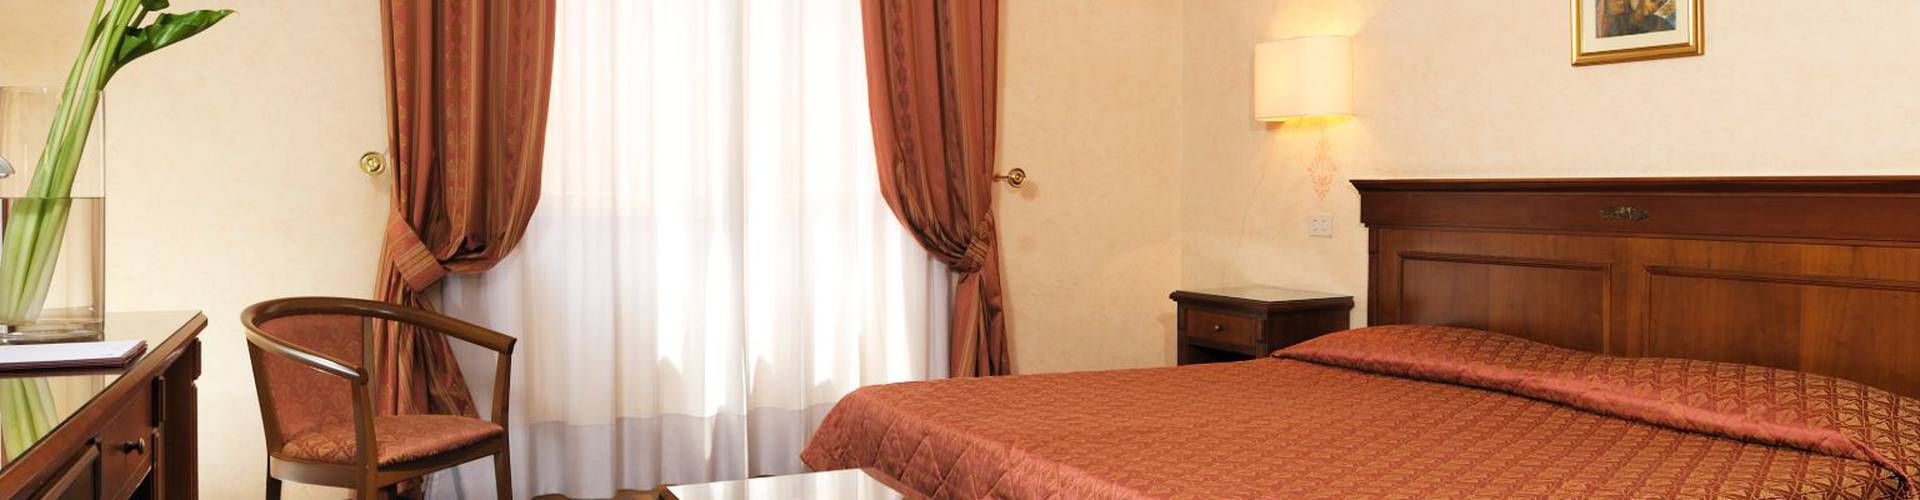 Leonardi Hotels - Rome - 